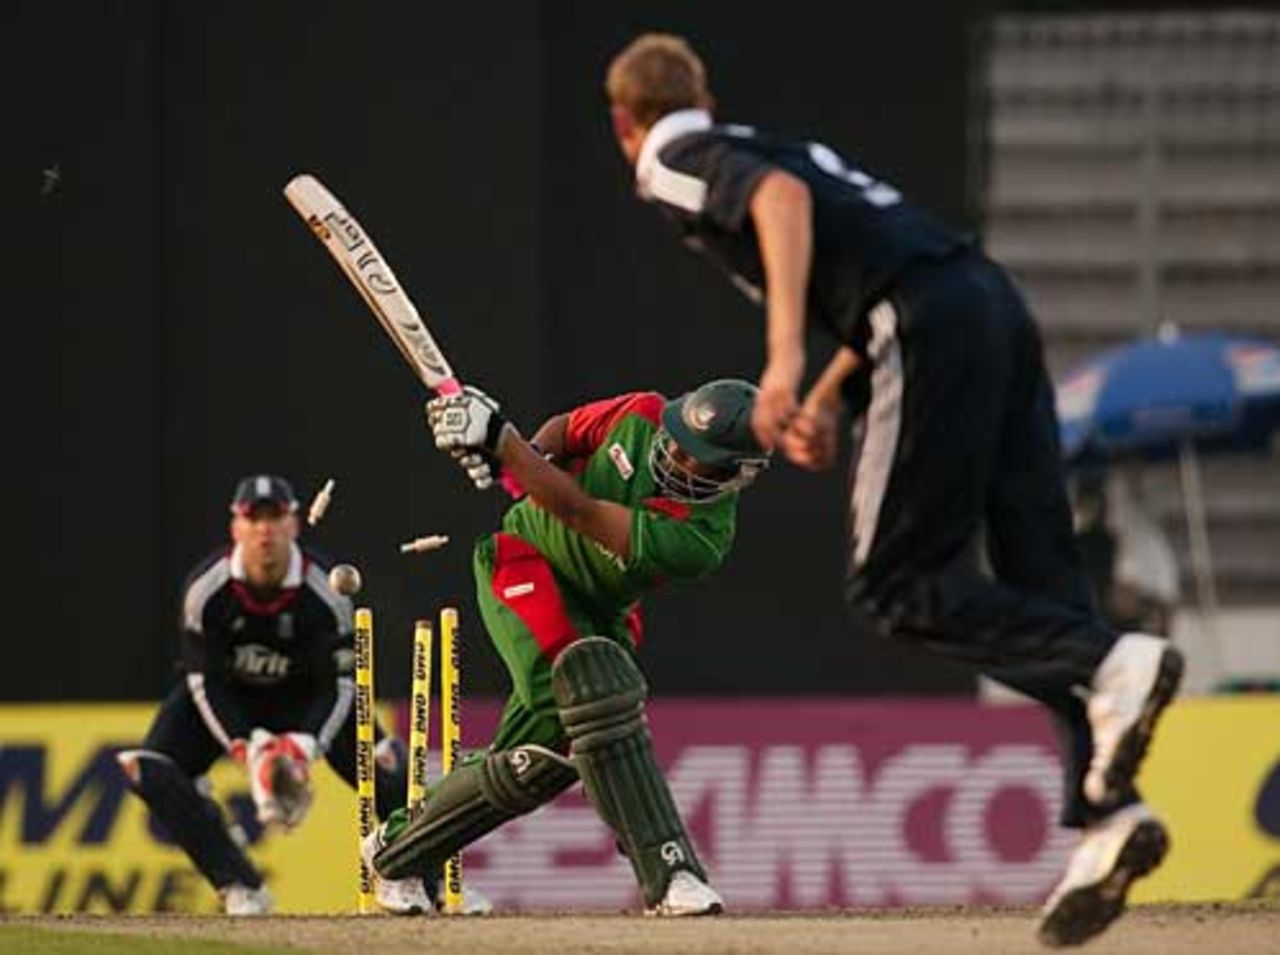 Tamim Iqbal's outstanding 125 is ended by Stuart Broad, Bangladesh v England, 1st ODI, Mirpur, February 28, 2010